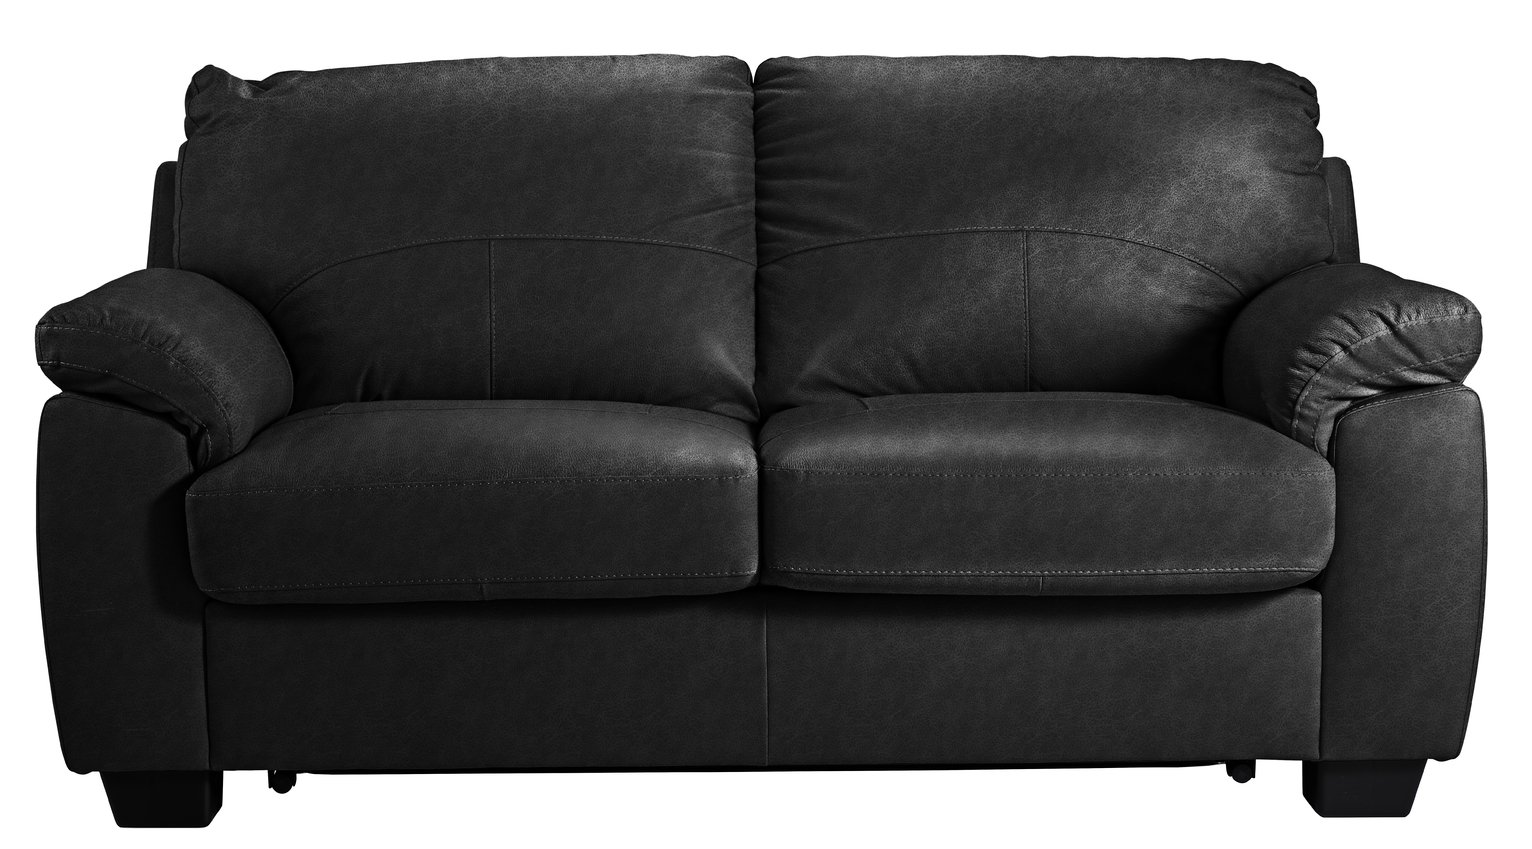 Argos Home Logan Bonded Leather Sofa Bed - Black